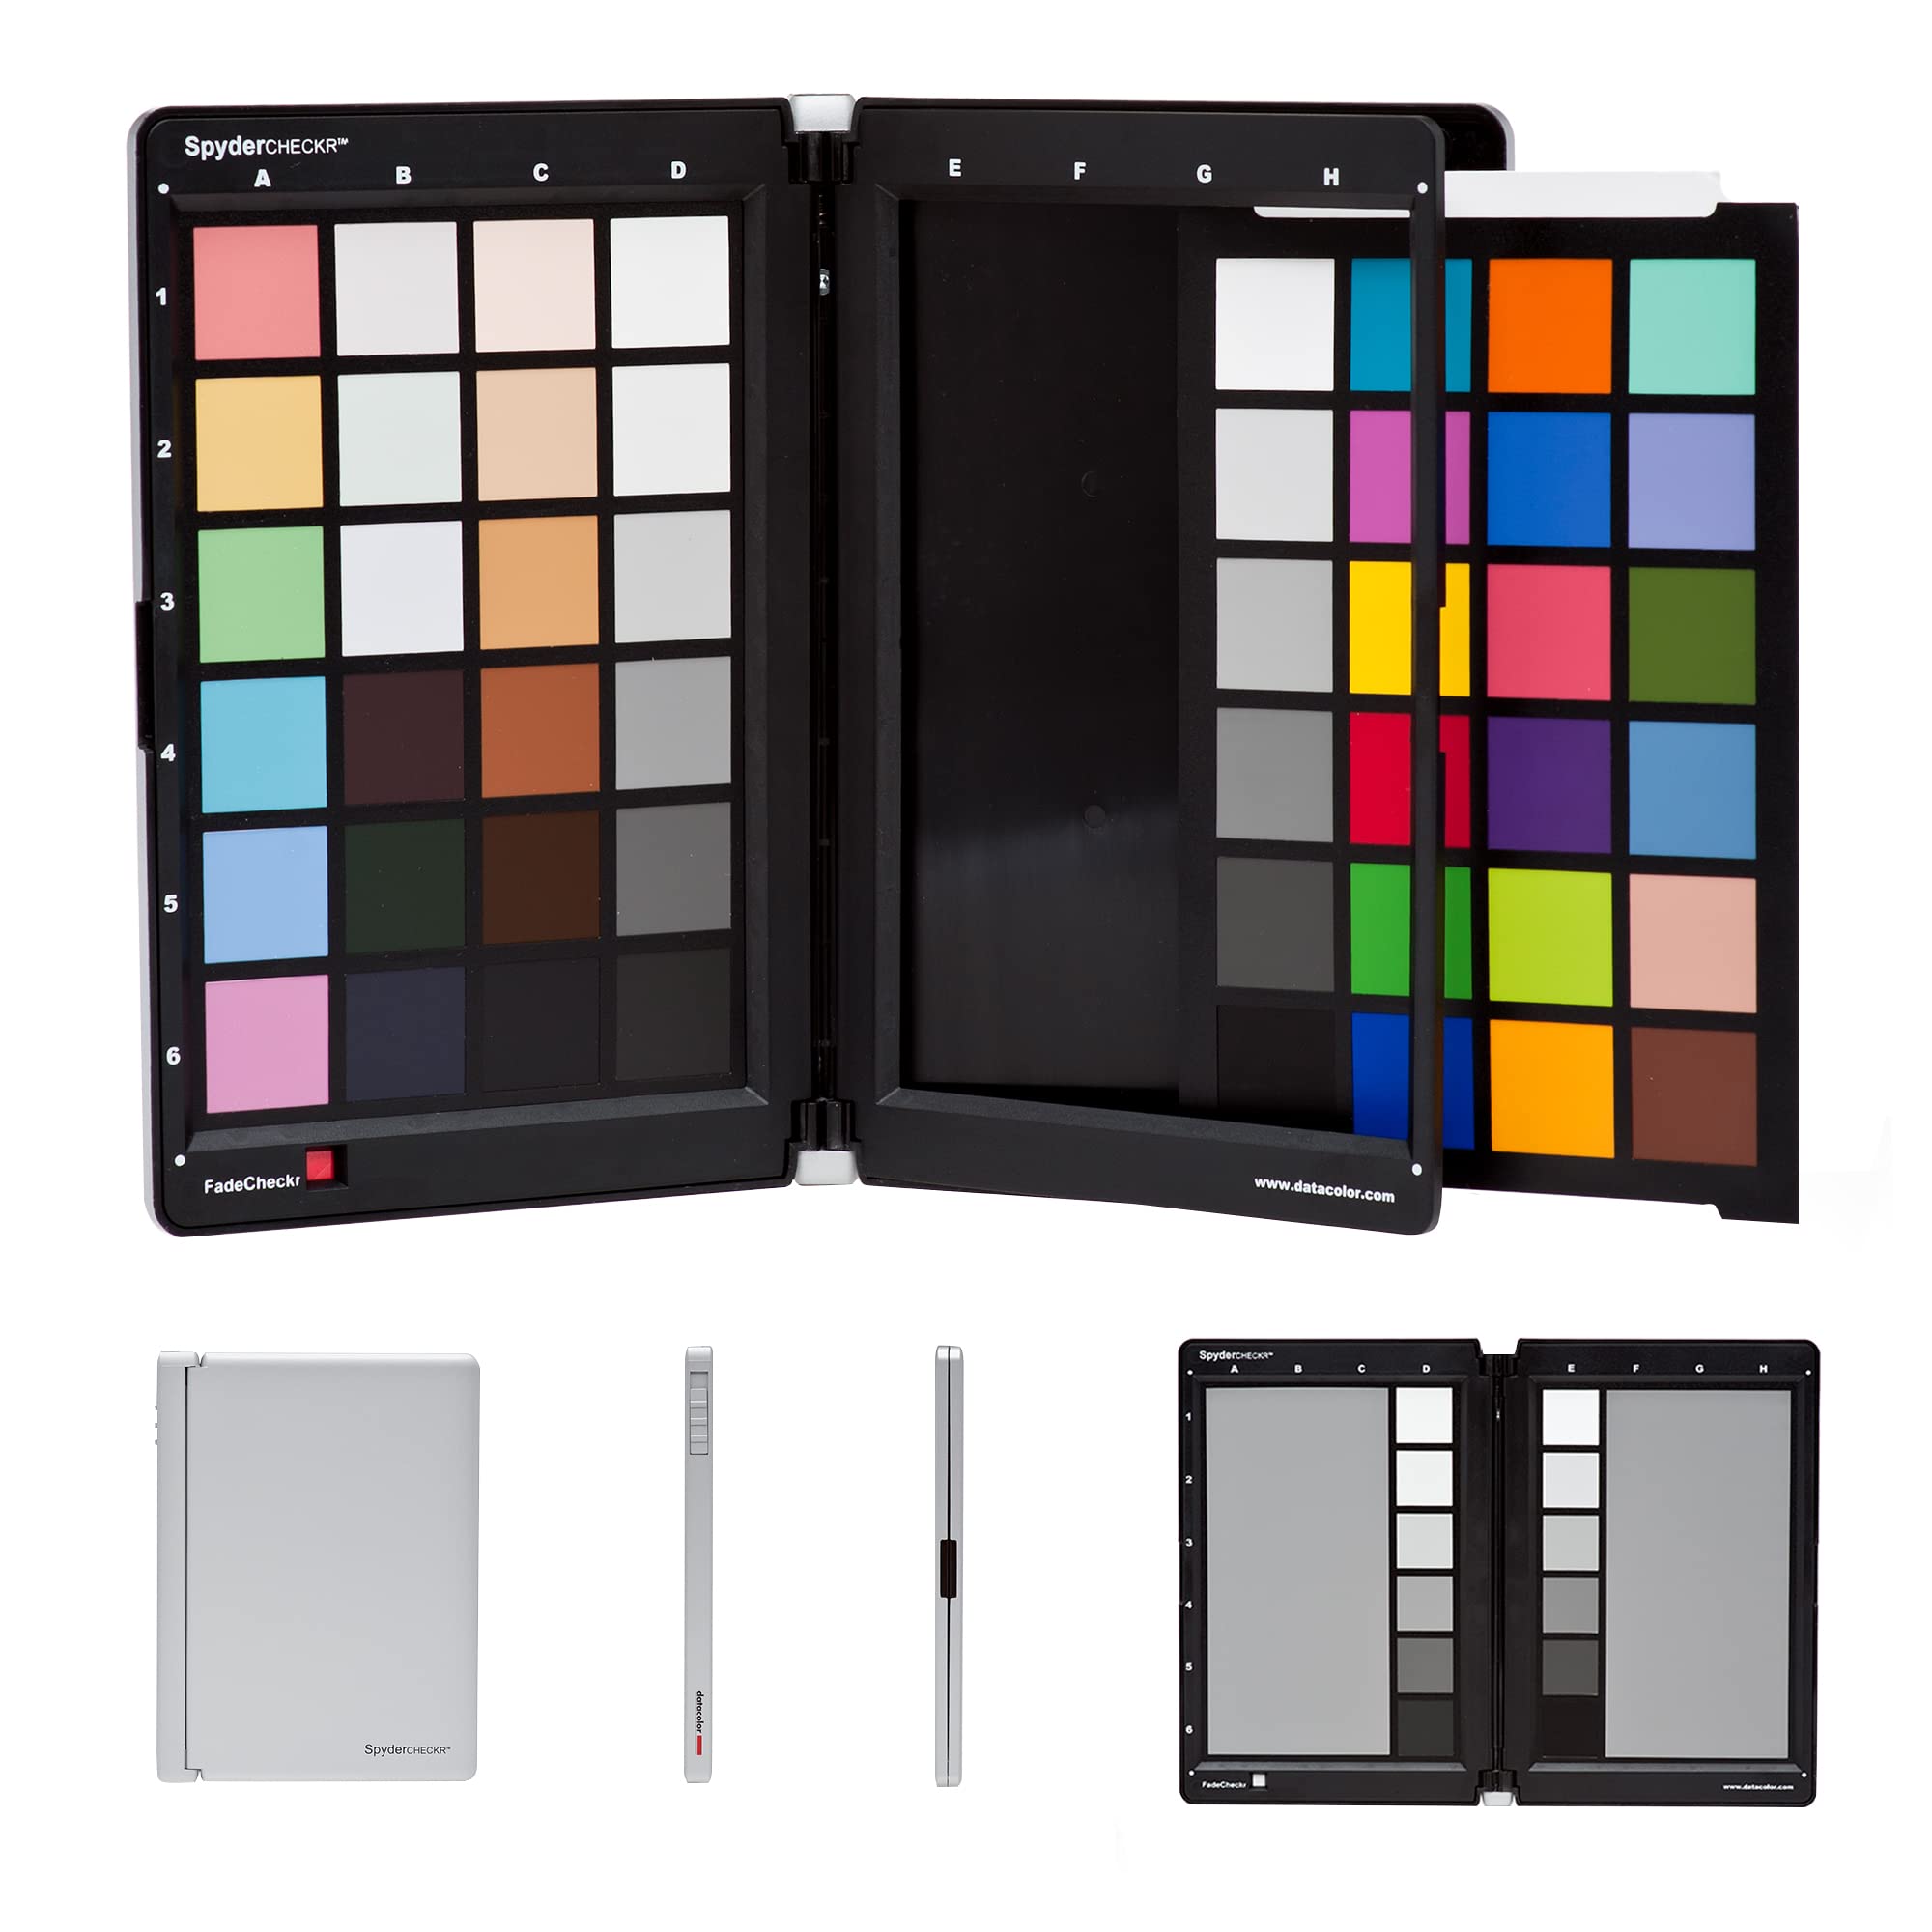 Datacolor Spyder Checkr 用于相机的颜色校准工具。确保使用不同的相机/灯光准确、一致的颜色。具有 48 种目标颜色 + 灰卡用于相机内白平衡